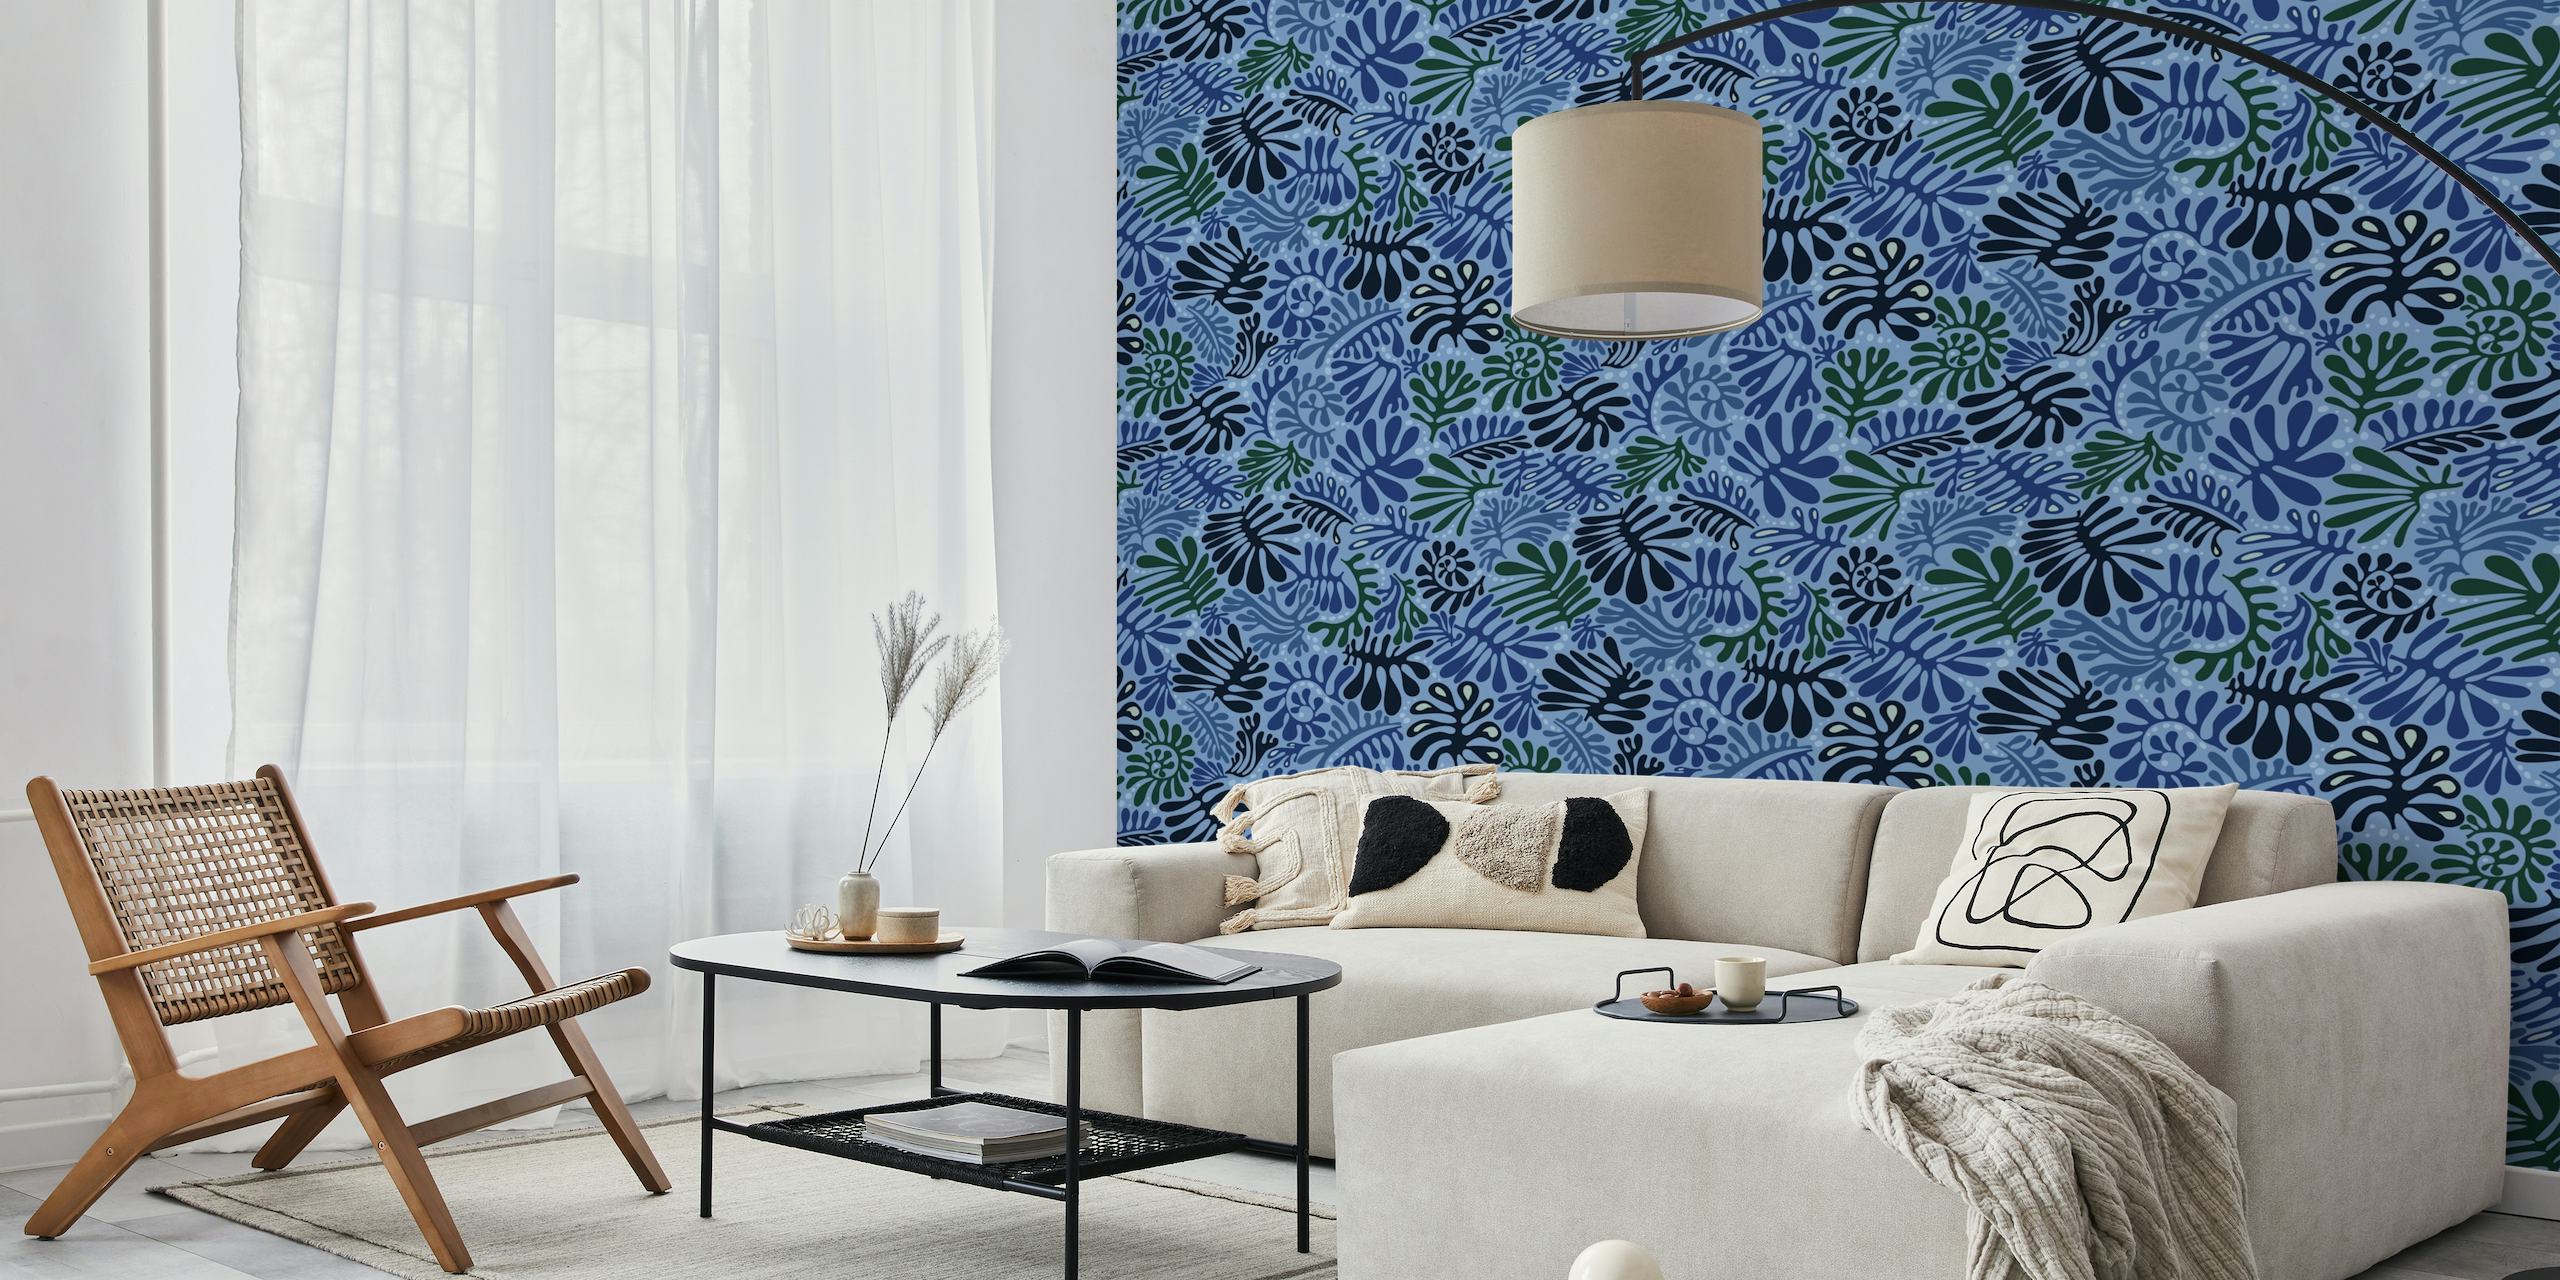 Elegante murale con motivi a foglie blu di happywall.com con varie tonalità di blu e disegni di ritagli di piante.